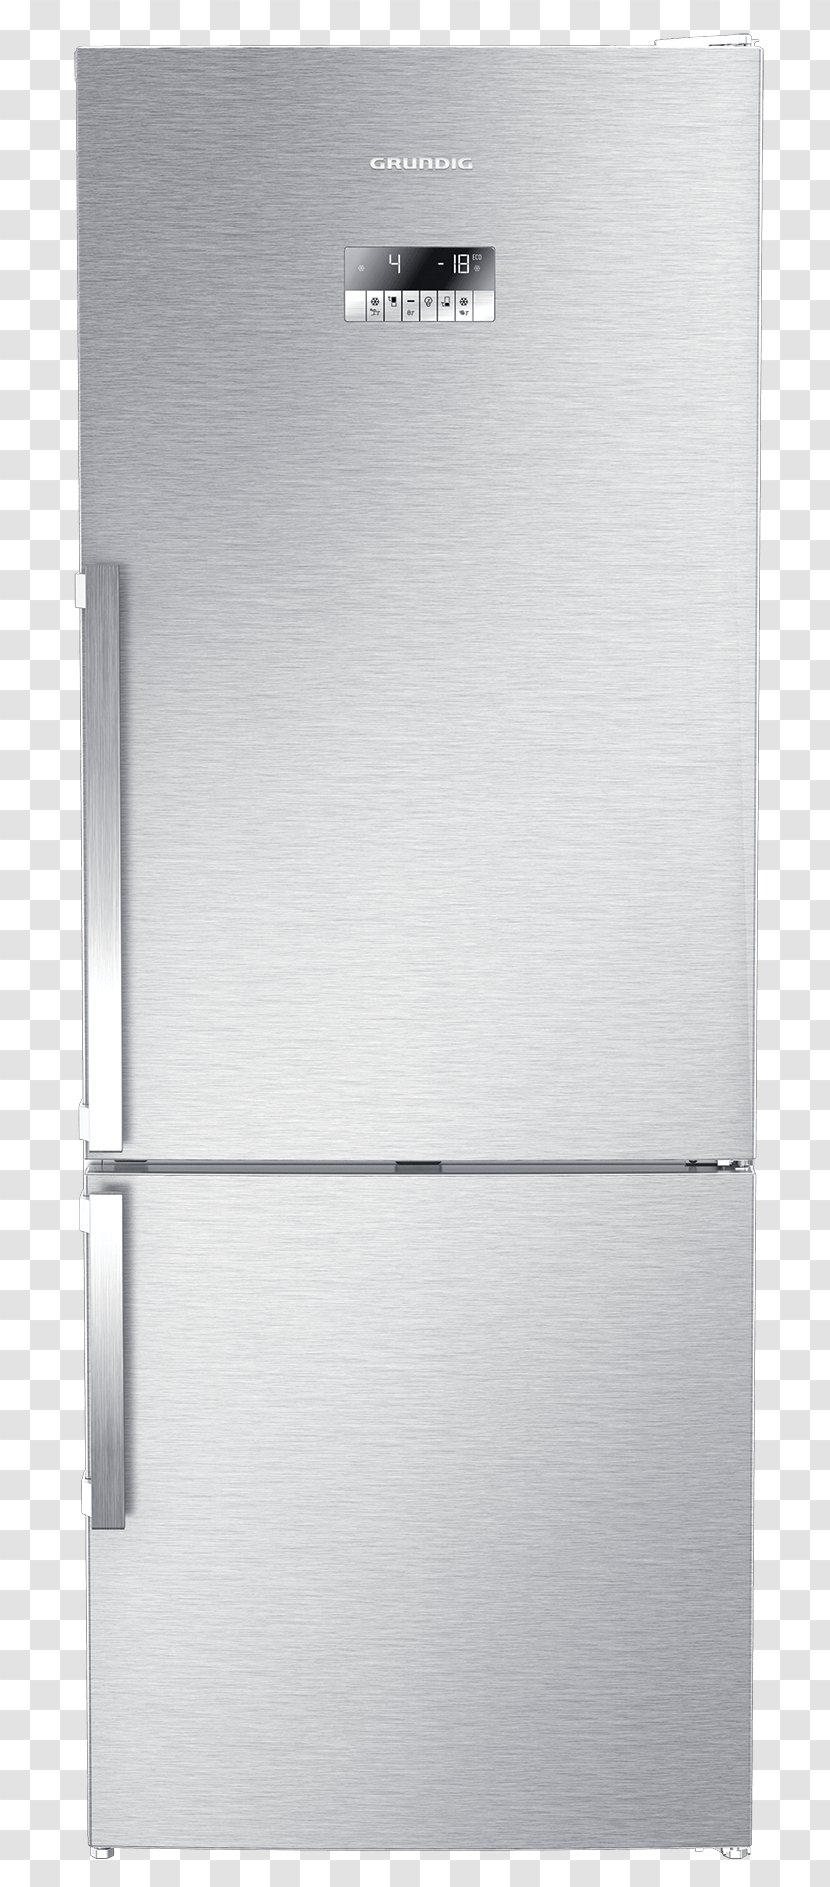 Refrigerator GKN16220 Auto-defrost GRUNDIG Grundig GSBS 14620 XWF GWN 21210 X - Major Appliance Transparent PNG